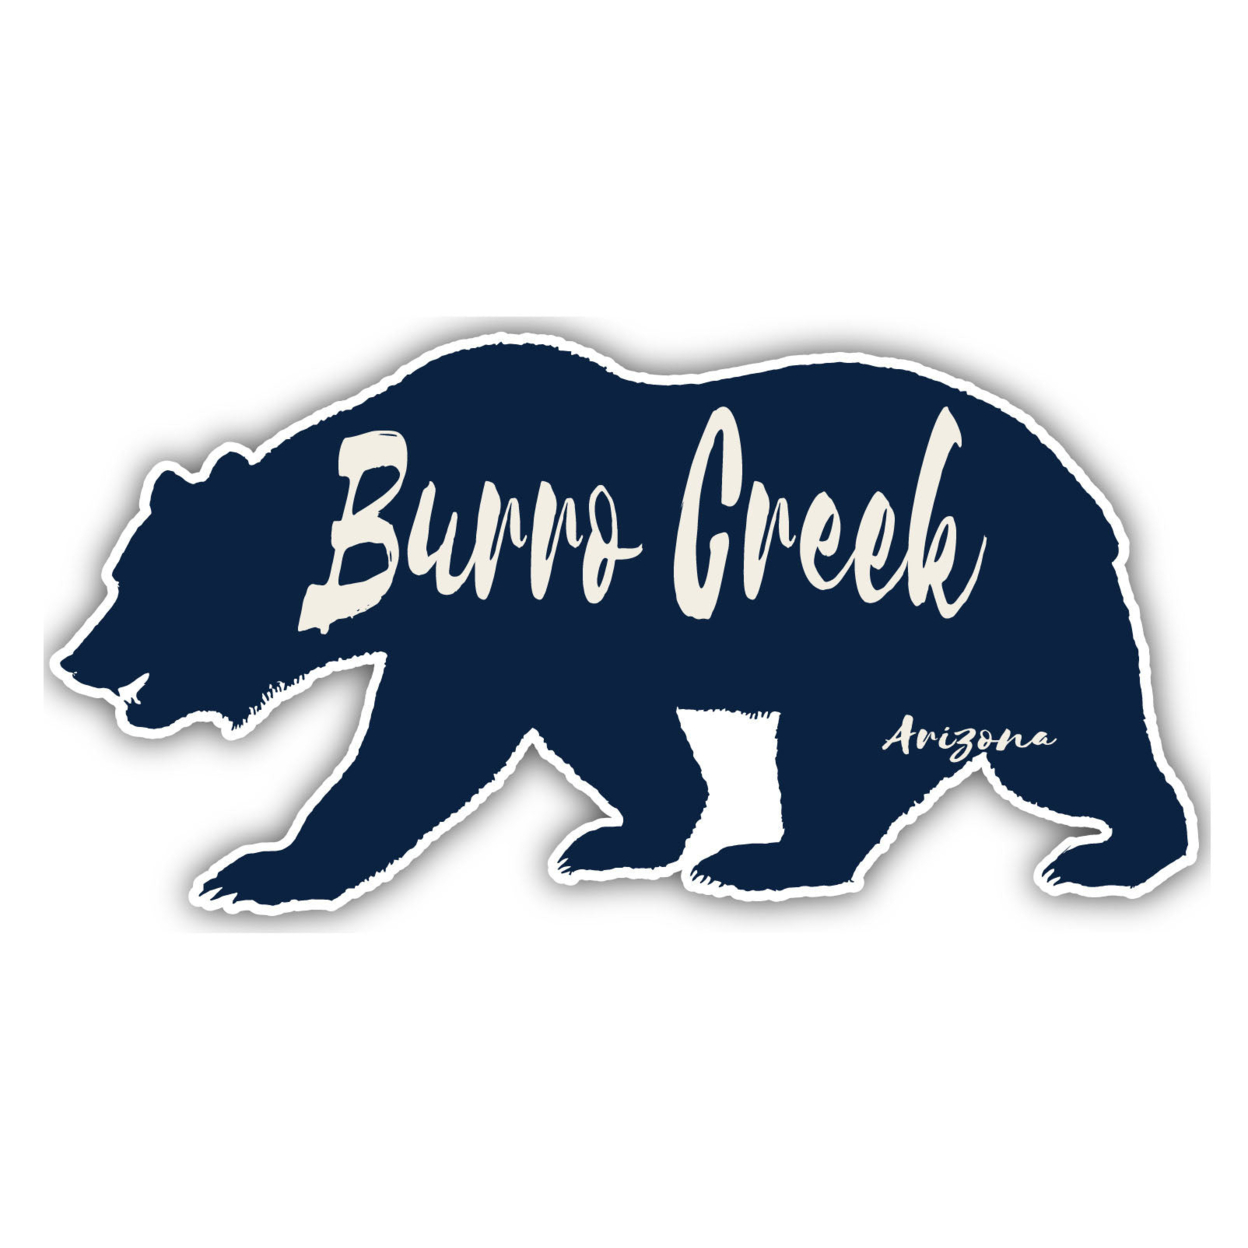 Burro Creek Arizona Souvenir Decorative Stickers (Choose Theme And Size) - 4-Pack, 10-Inch, Bear